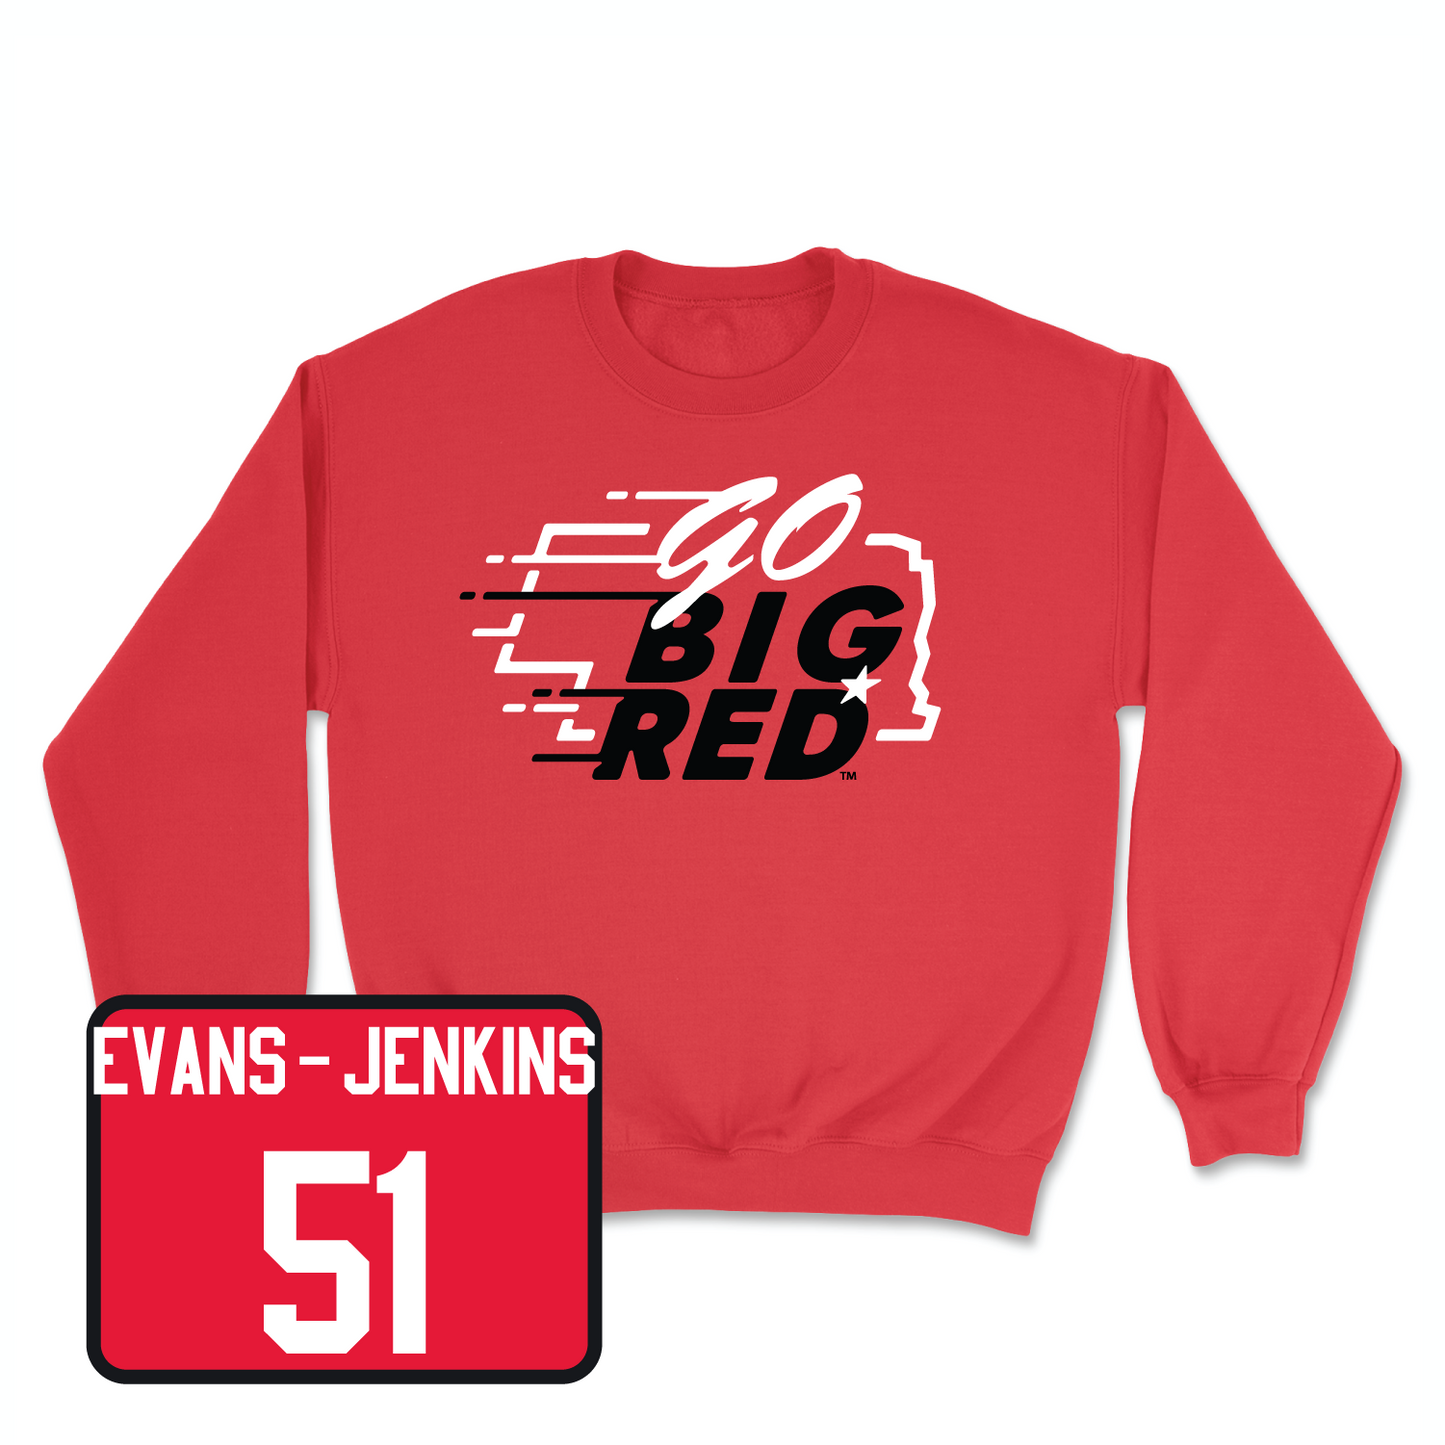 Red Football GBR Crew 6 3X-Large / Justin Evans-Jenkins | #51